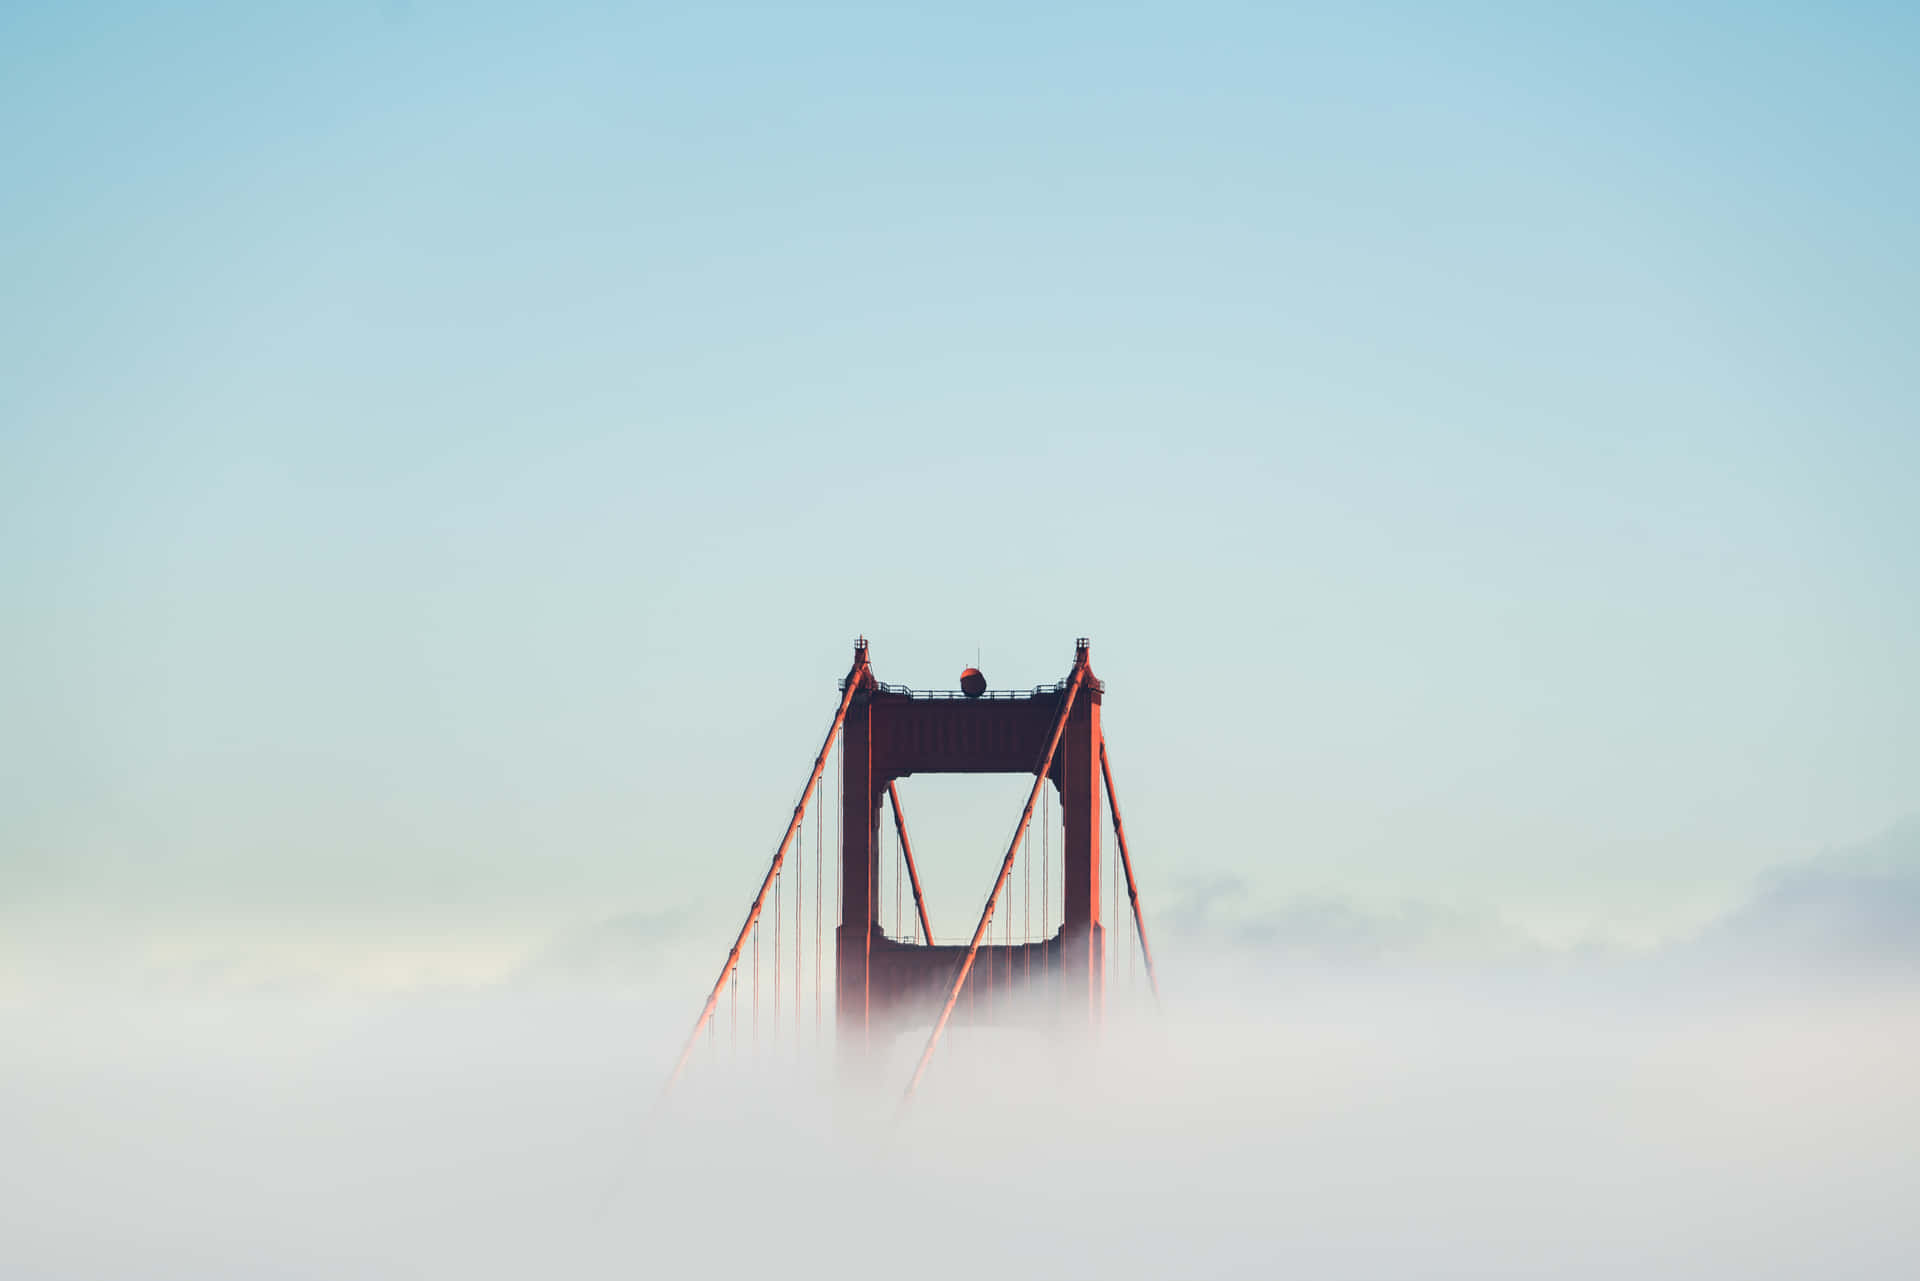 Goldenegate Bridge Im Nebel.